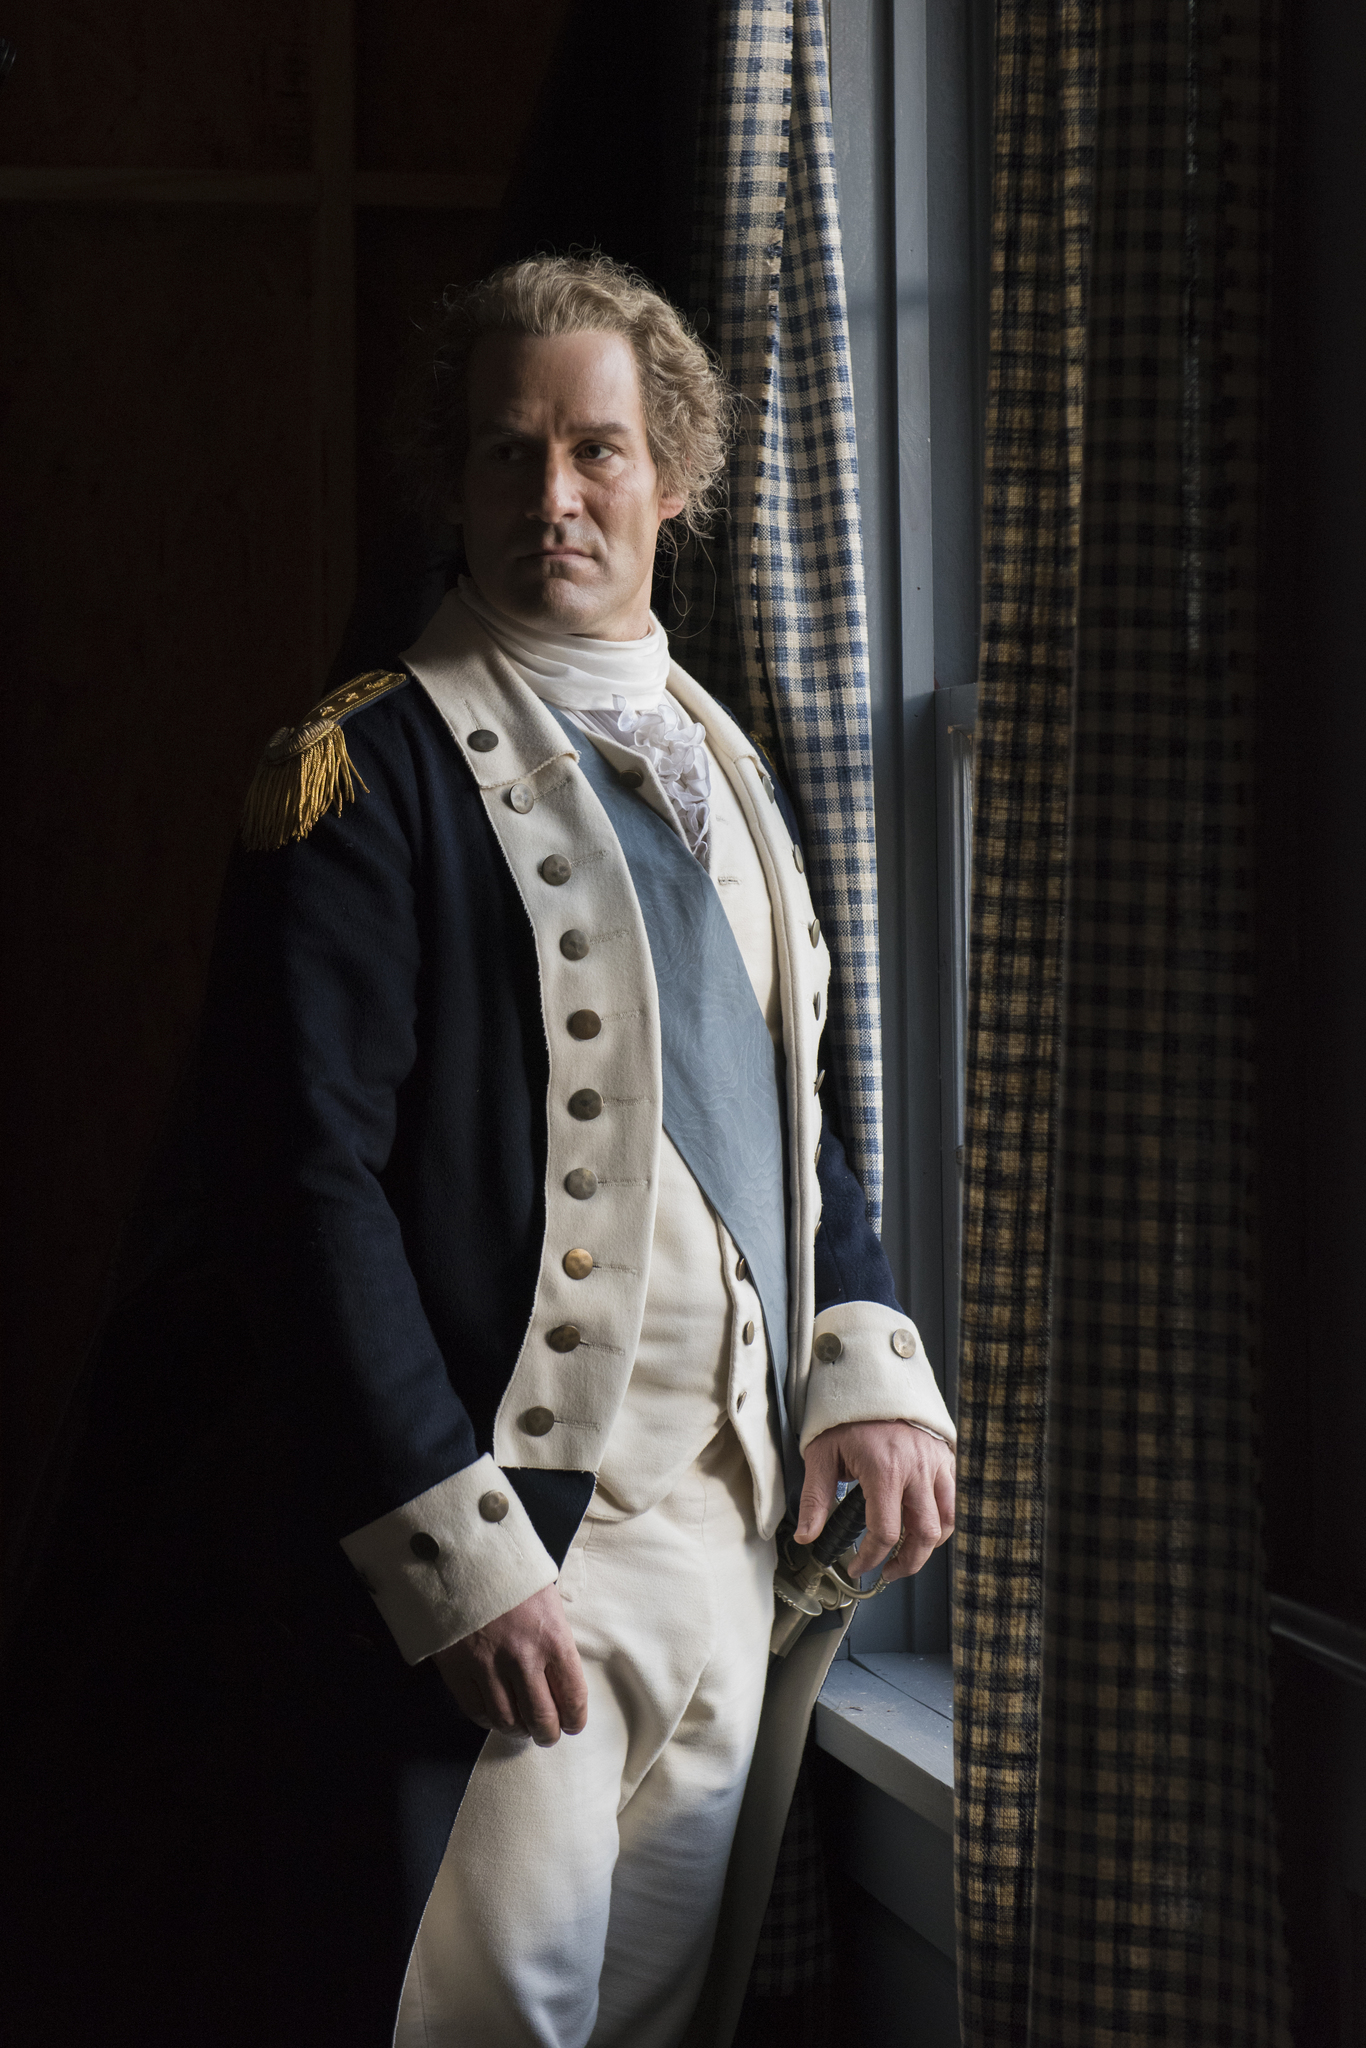 Ian Kahn as George Washington in the TV Series TURN Washington's Spies